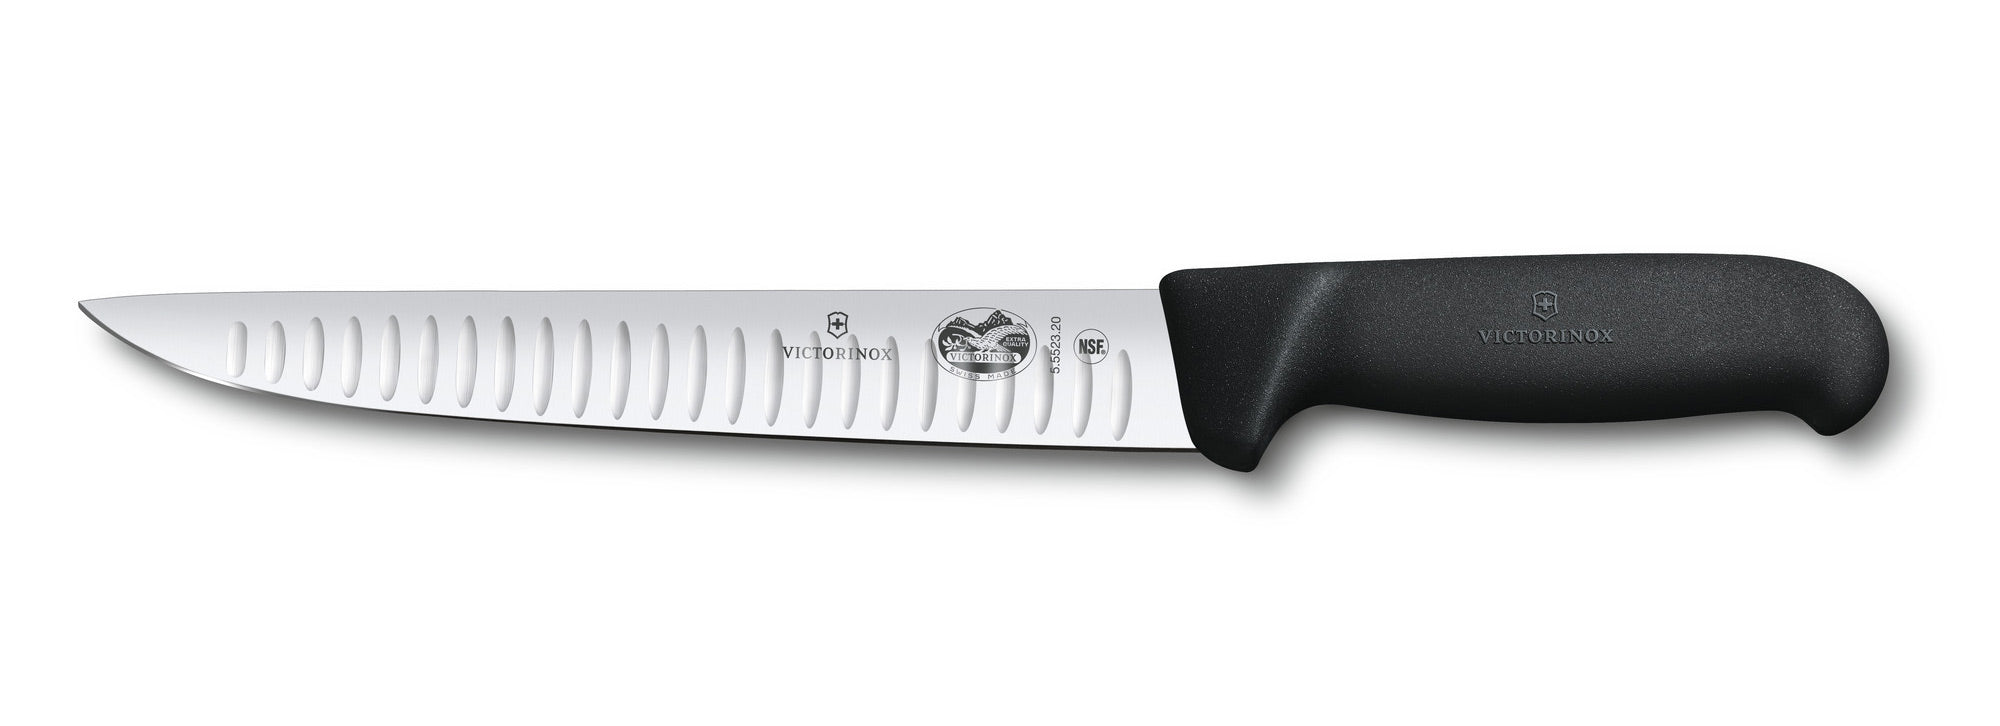 Victorinox Slicing Knife 40645 12 Granton Edge Fibrox Handle